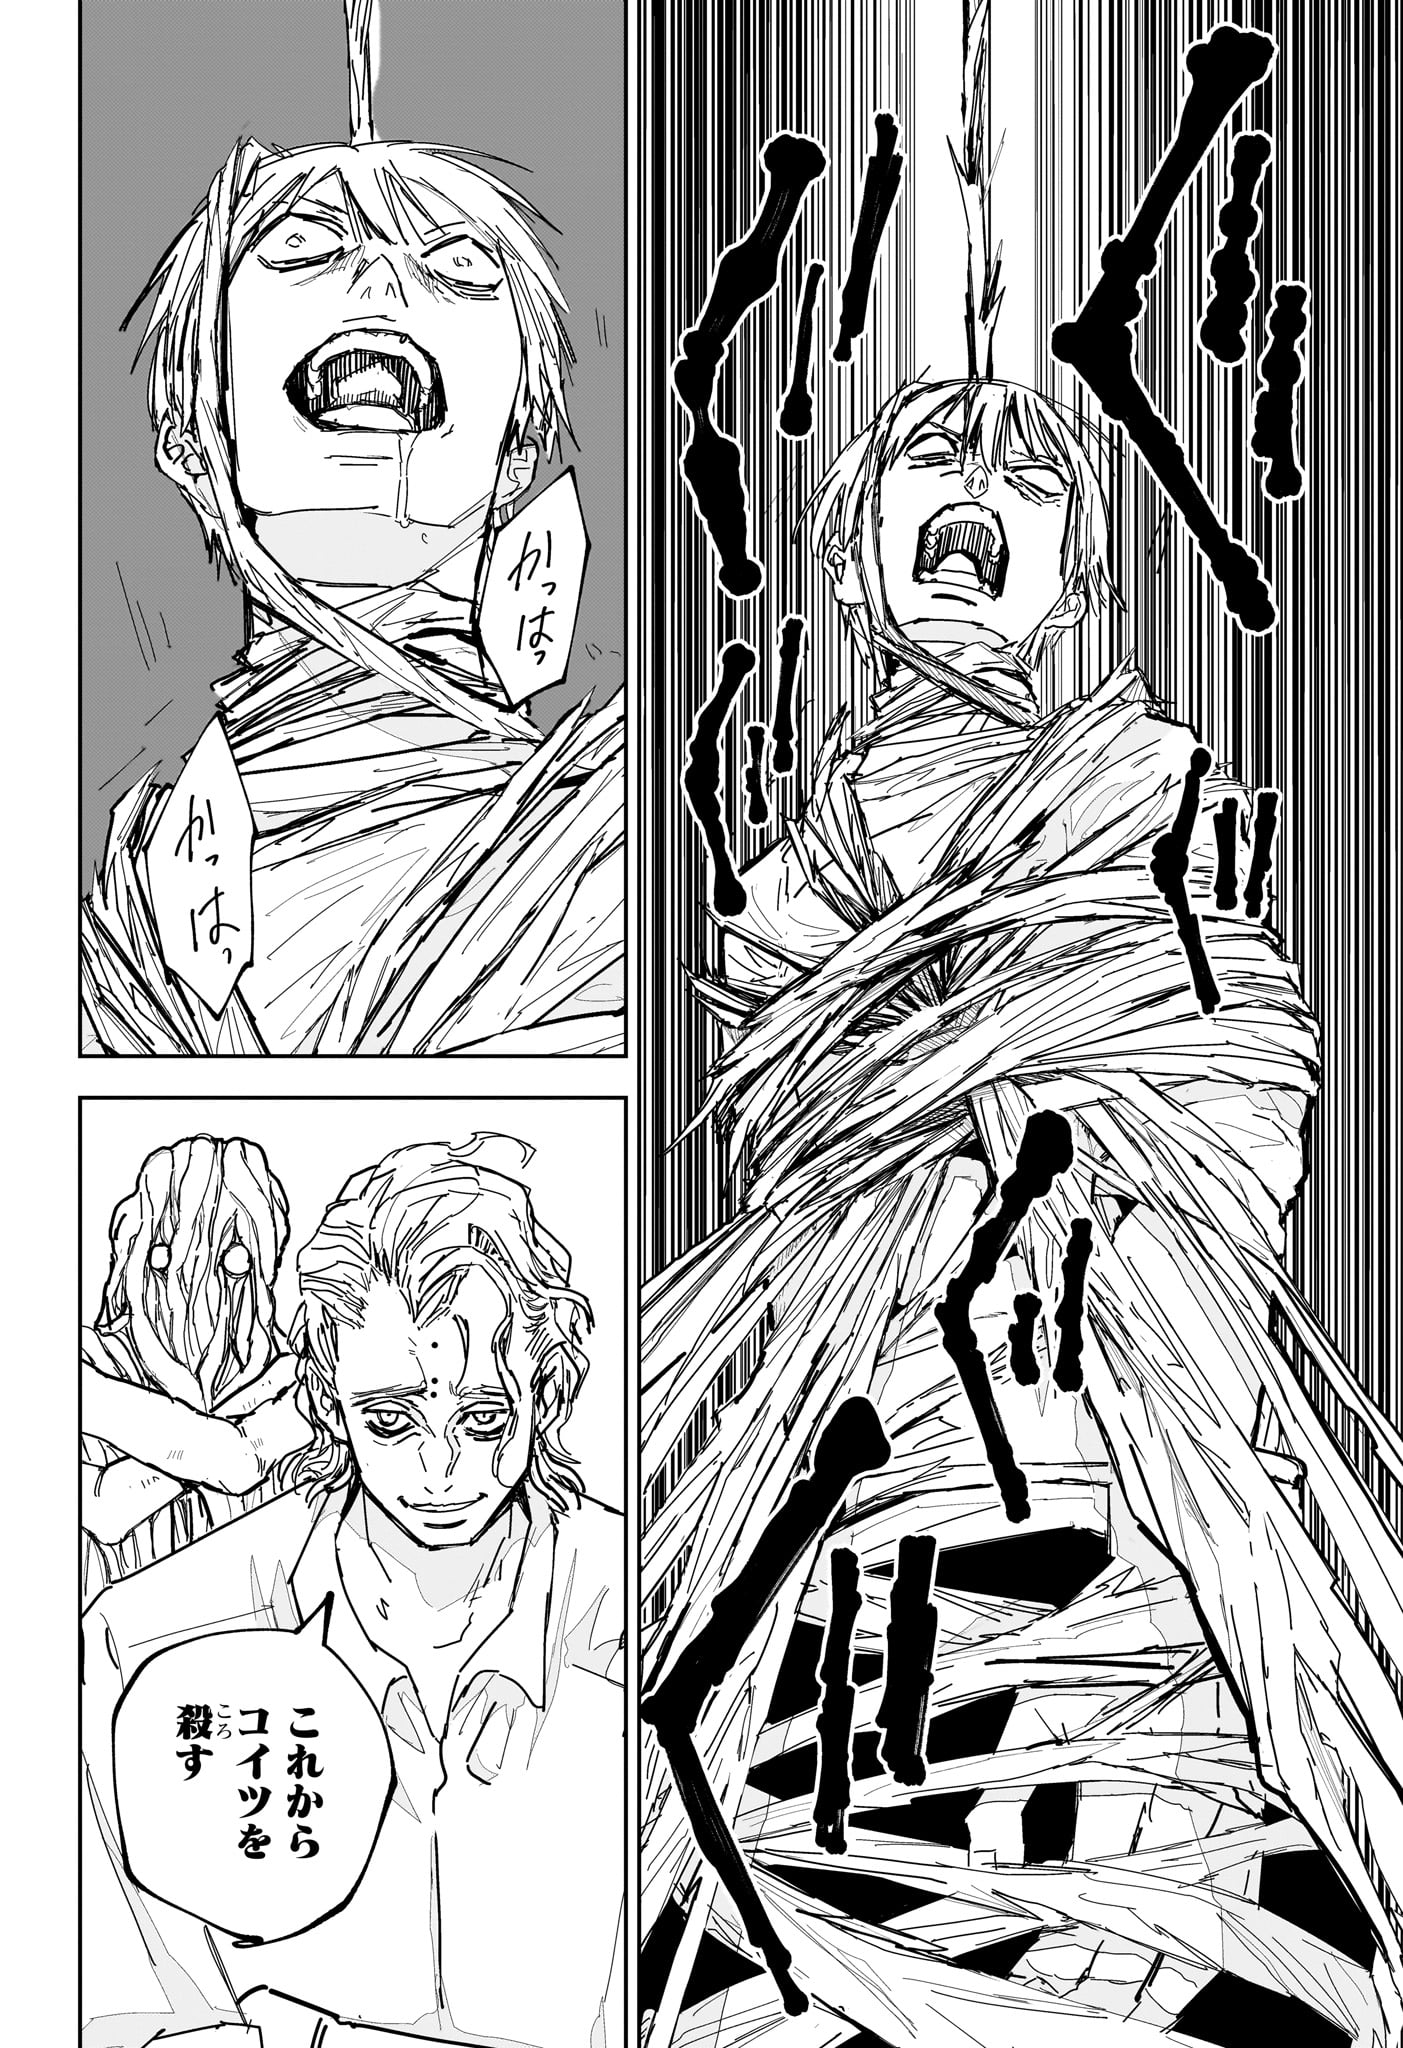 Kyokuto Necromance - Chapter 13 - Page 14